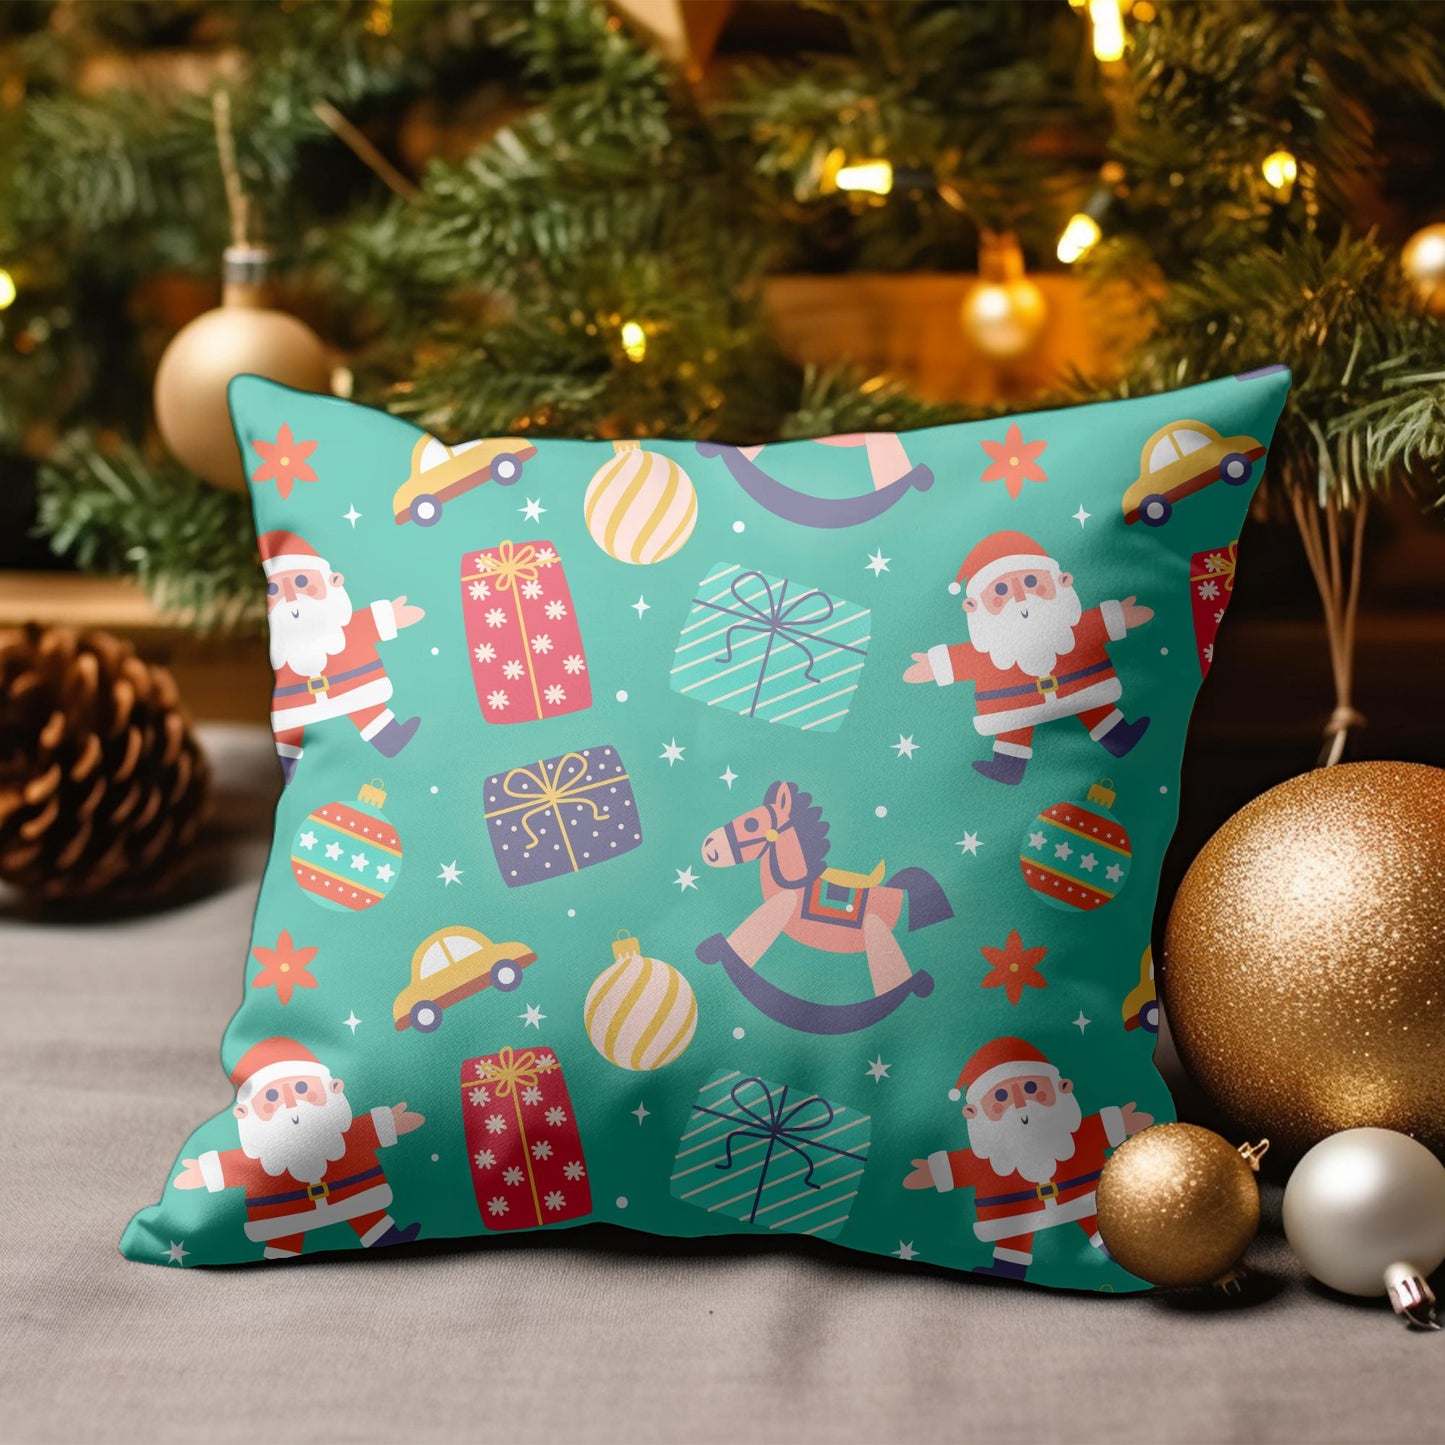 Christmas Throw Pillow with Fun Kids' Room Design